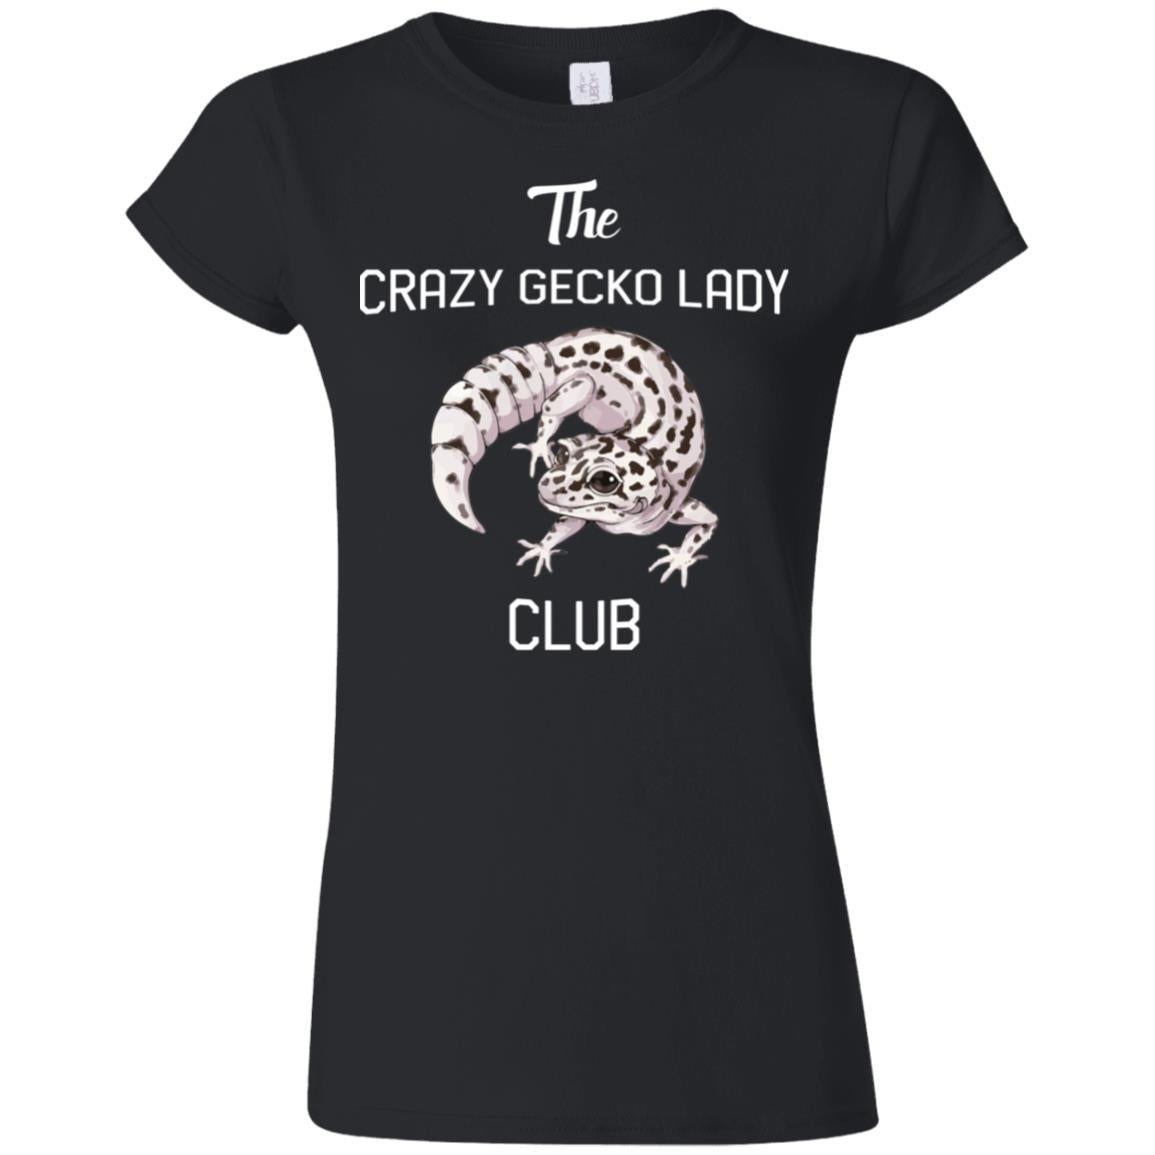 The Crazy Gecko Lady Club - Womens T-Shirt